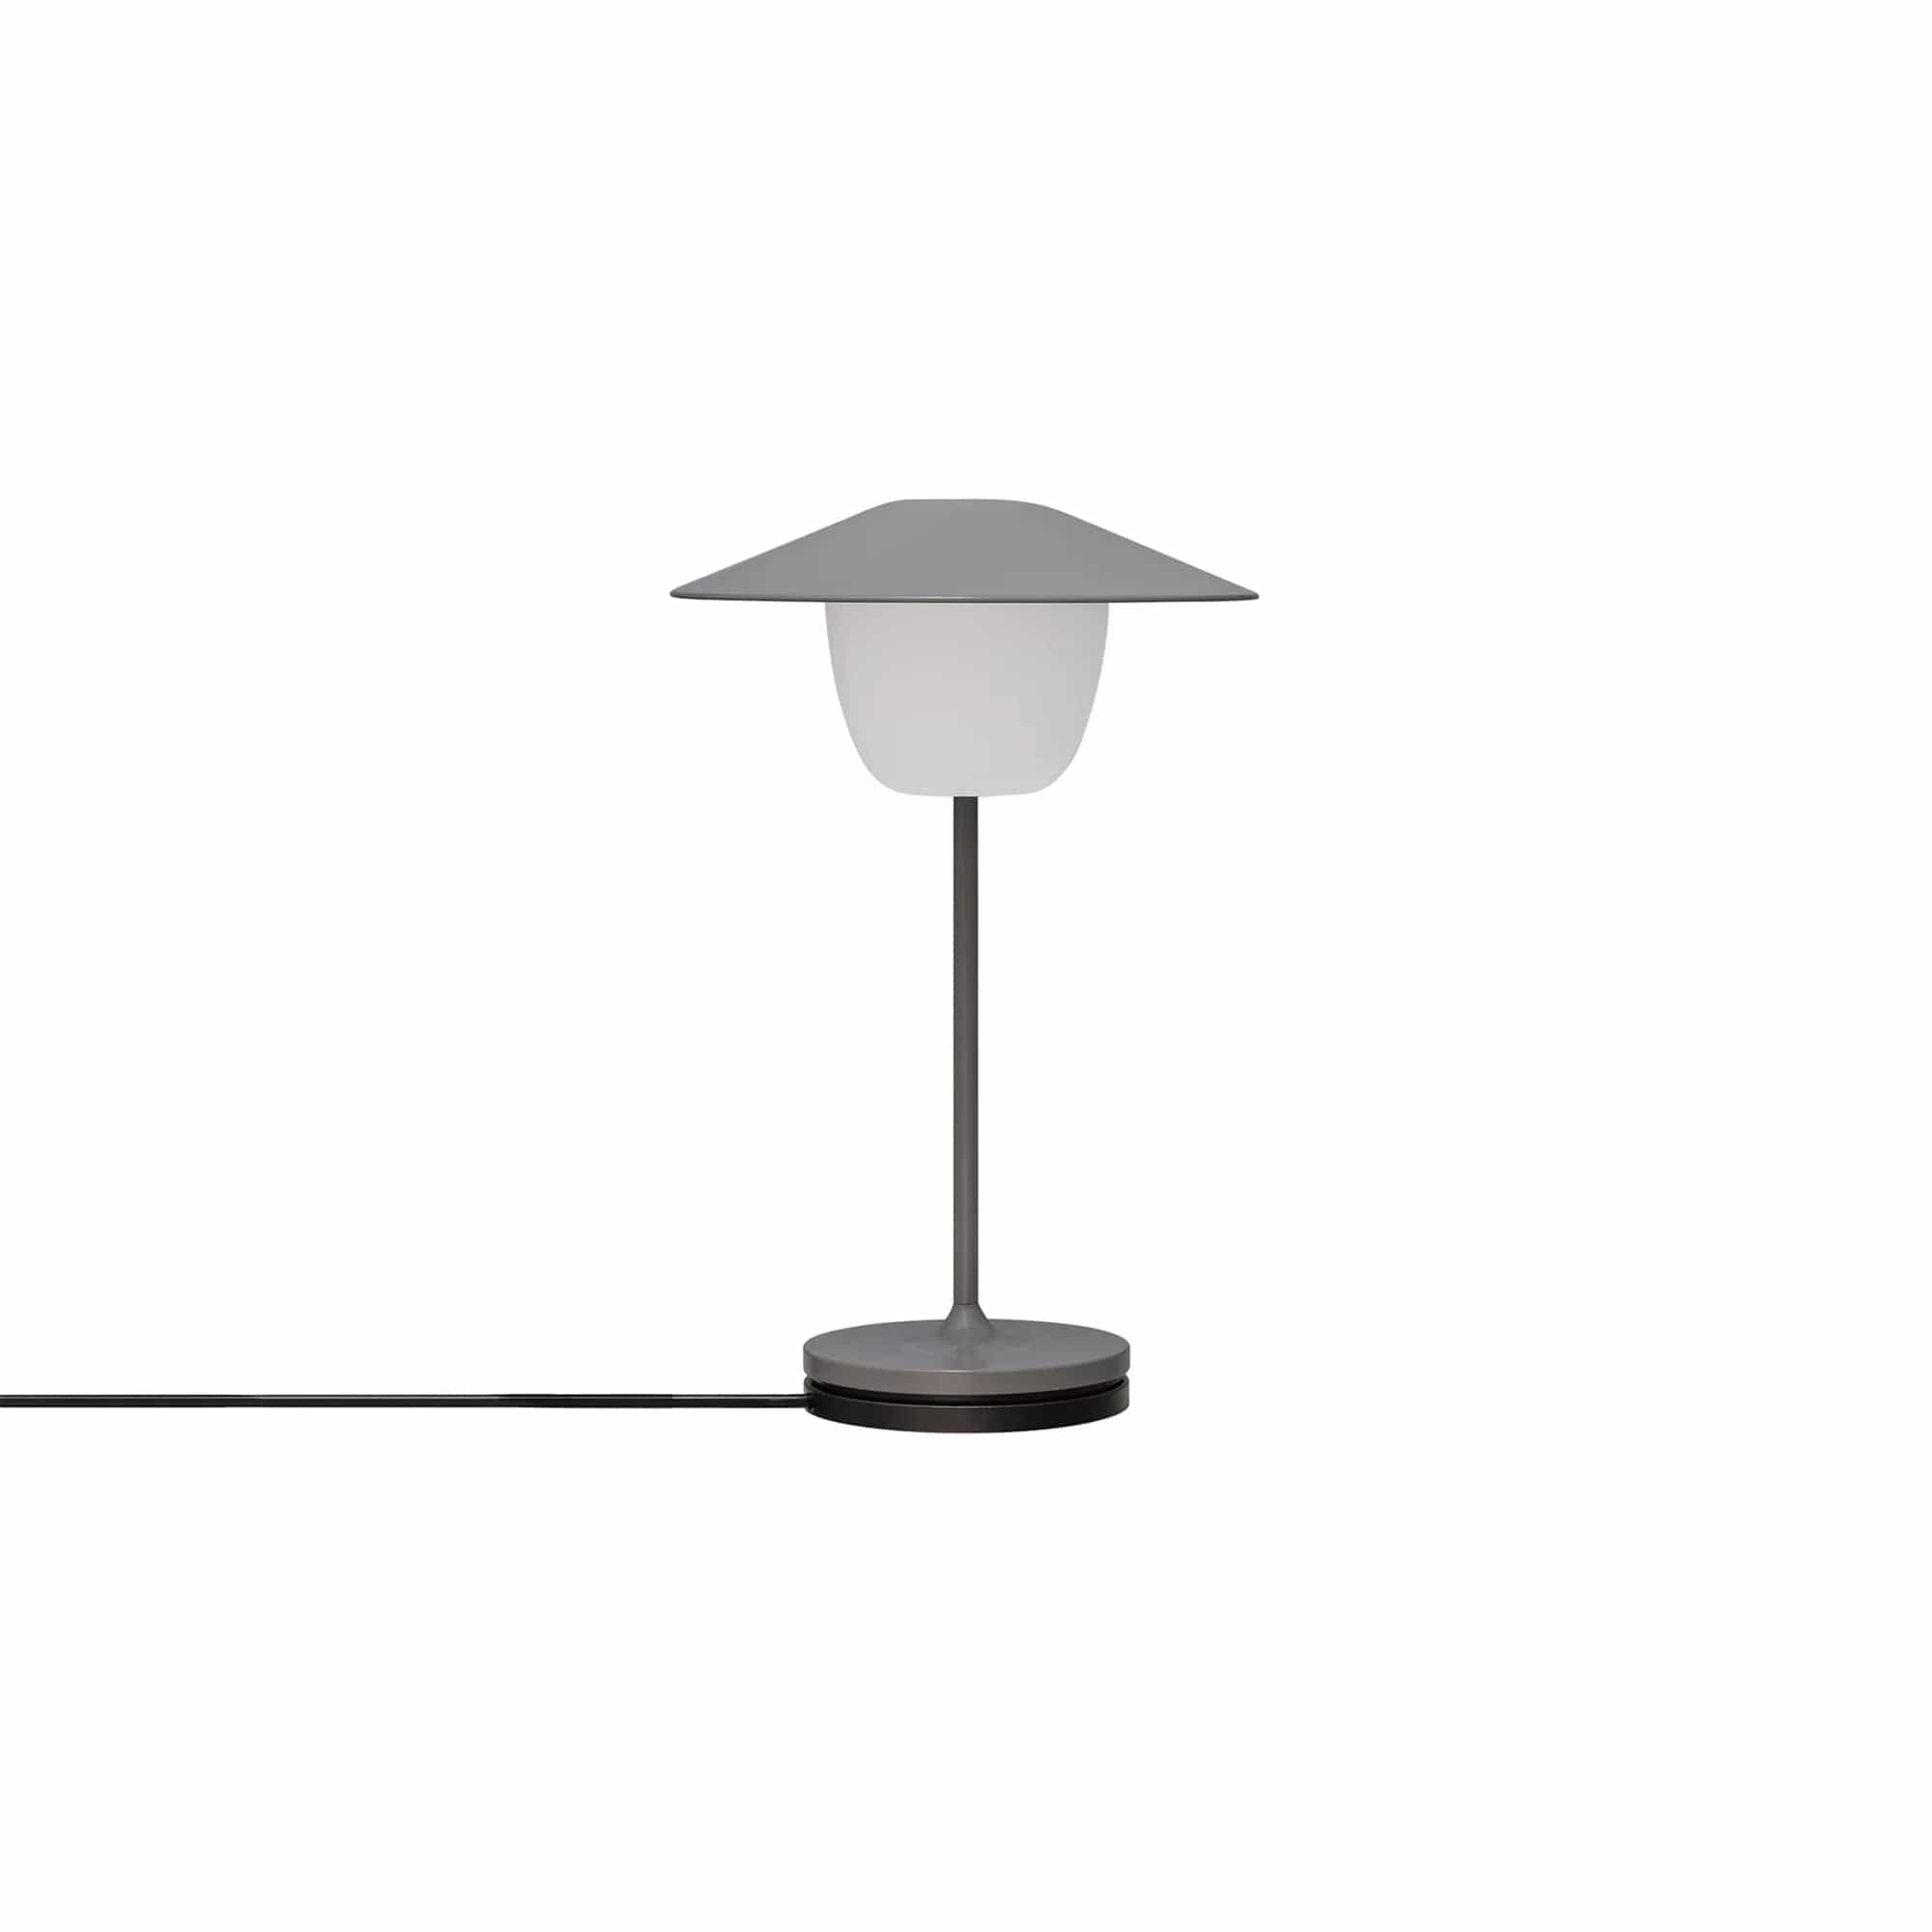 LED-Laterne ANI mini indoor & outdoor  - warm grey